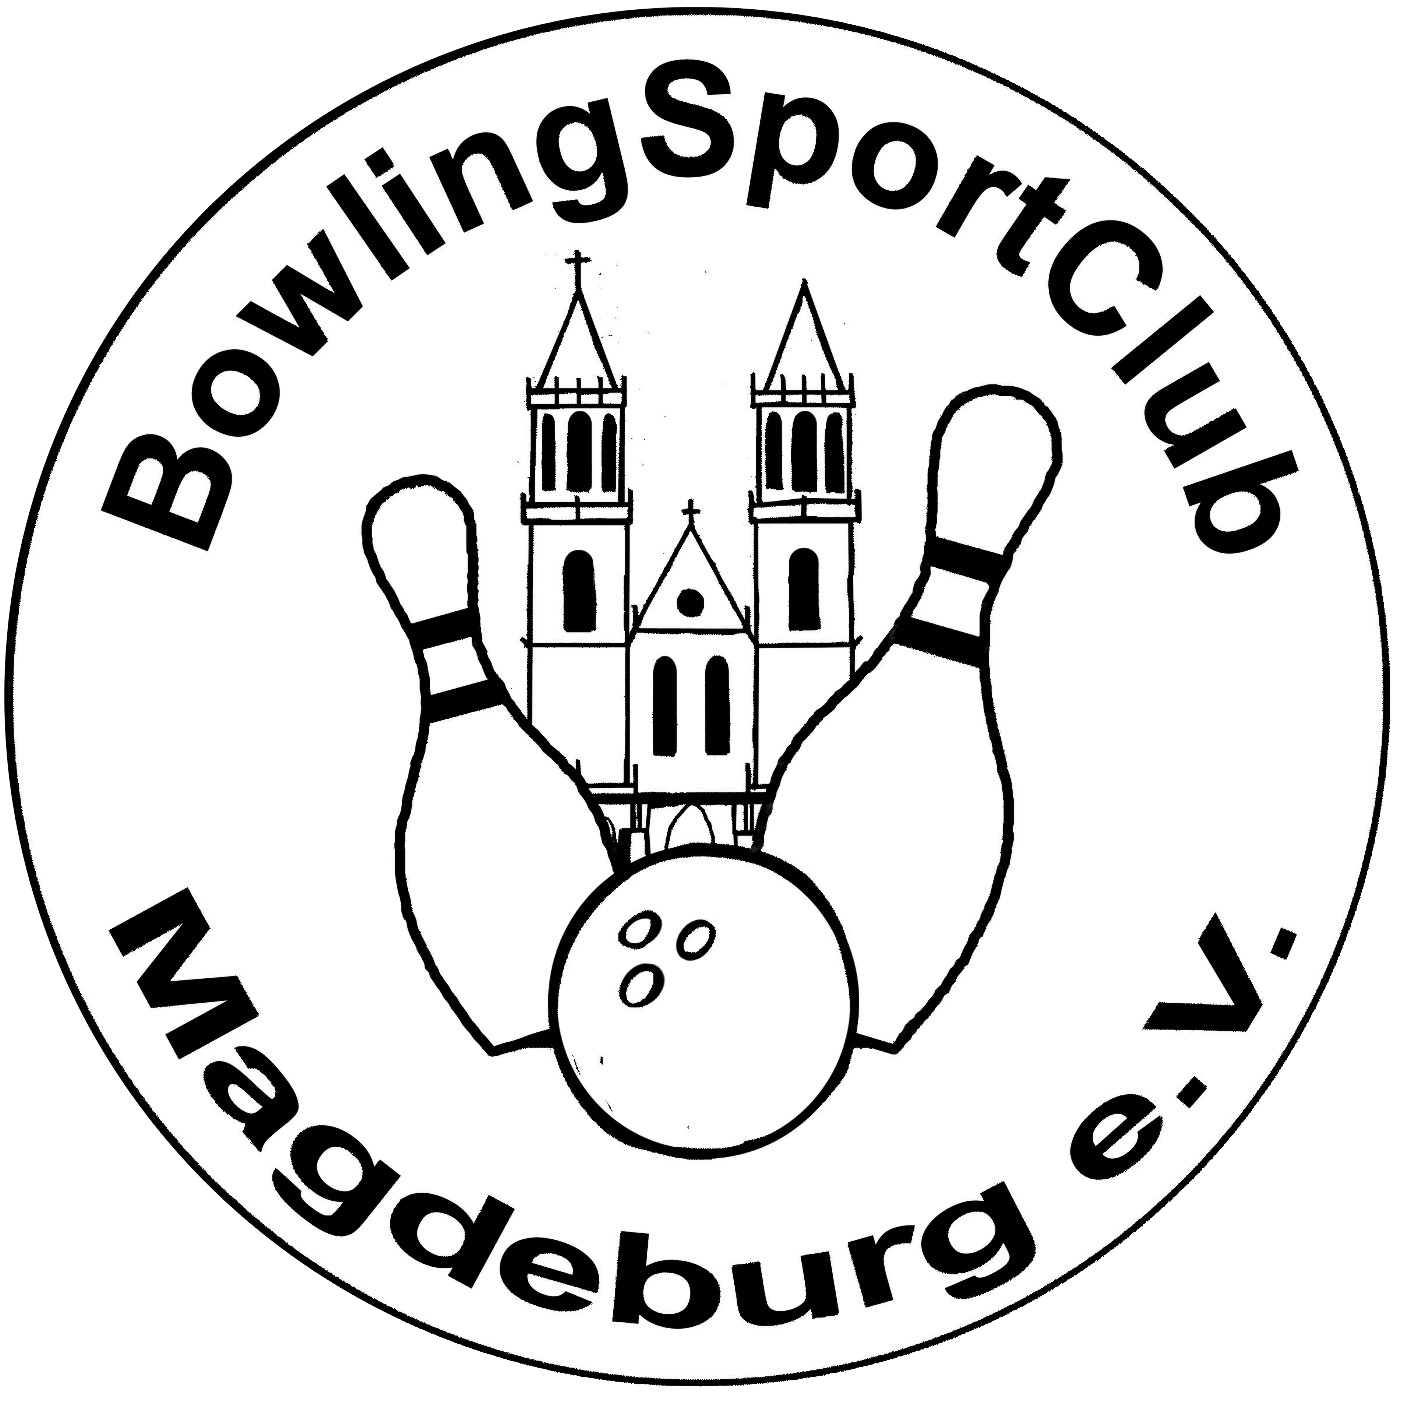 BowlingSportClub Magdeburg